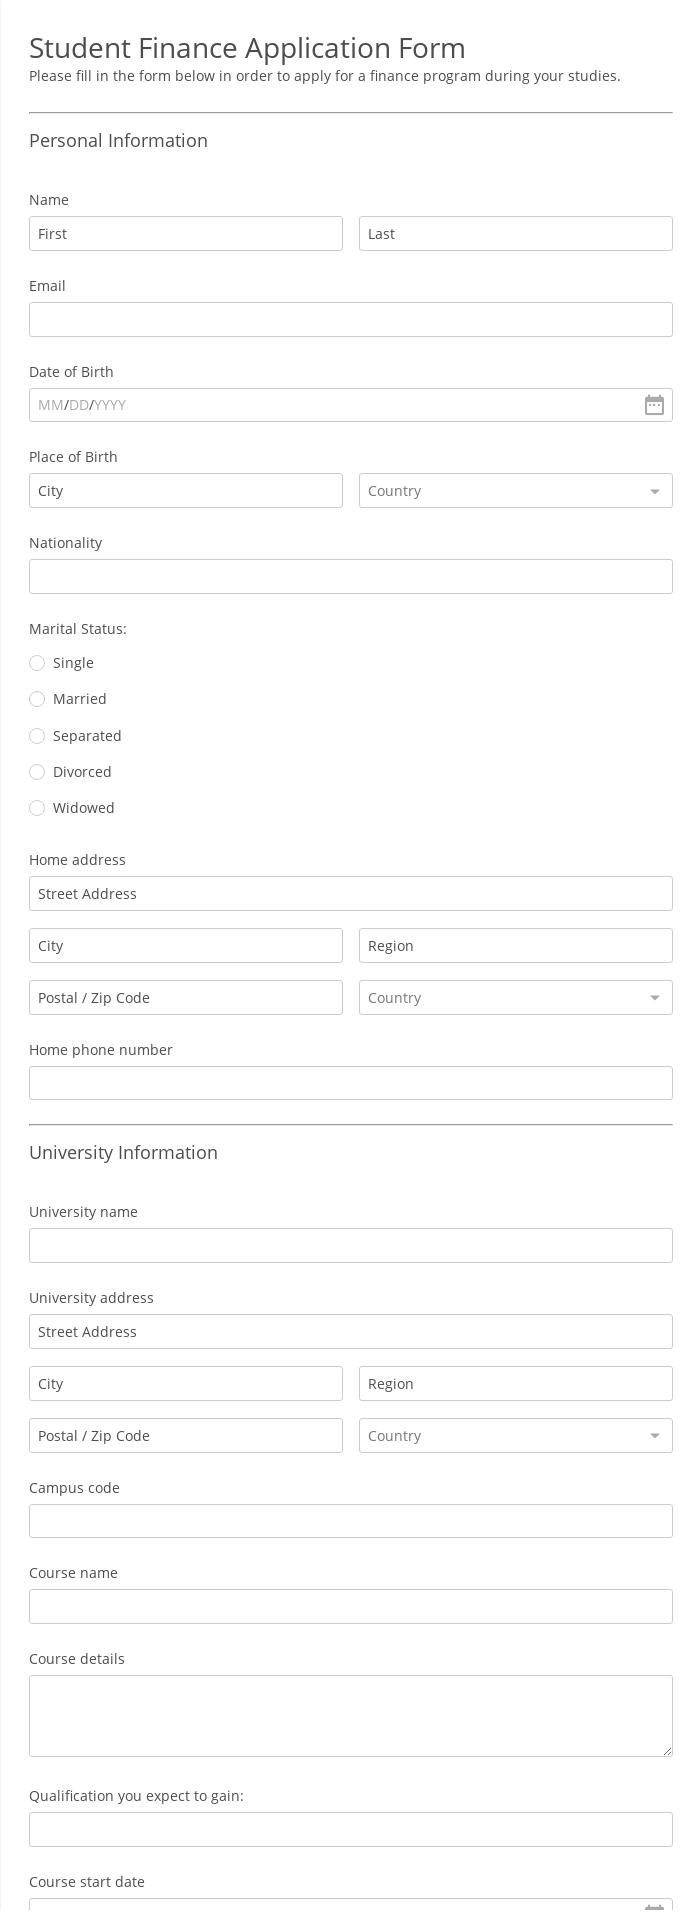 Student Finance Application Form